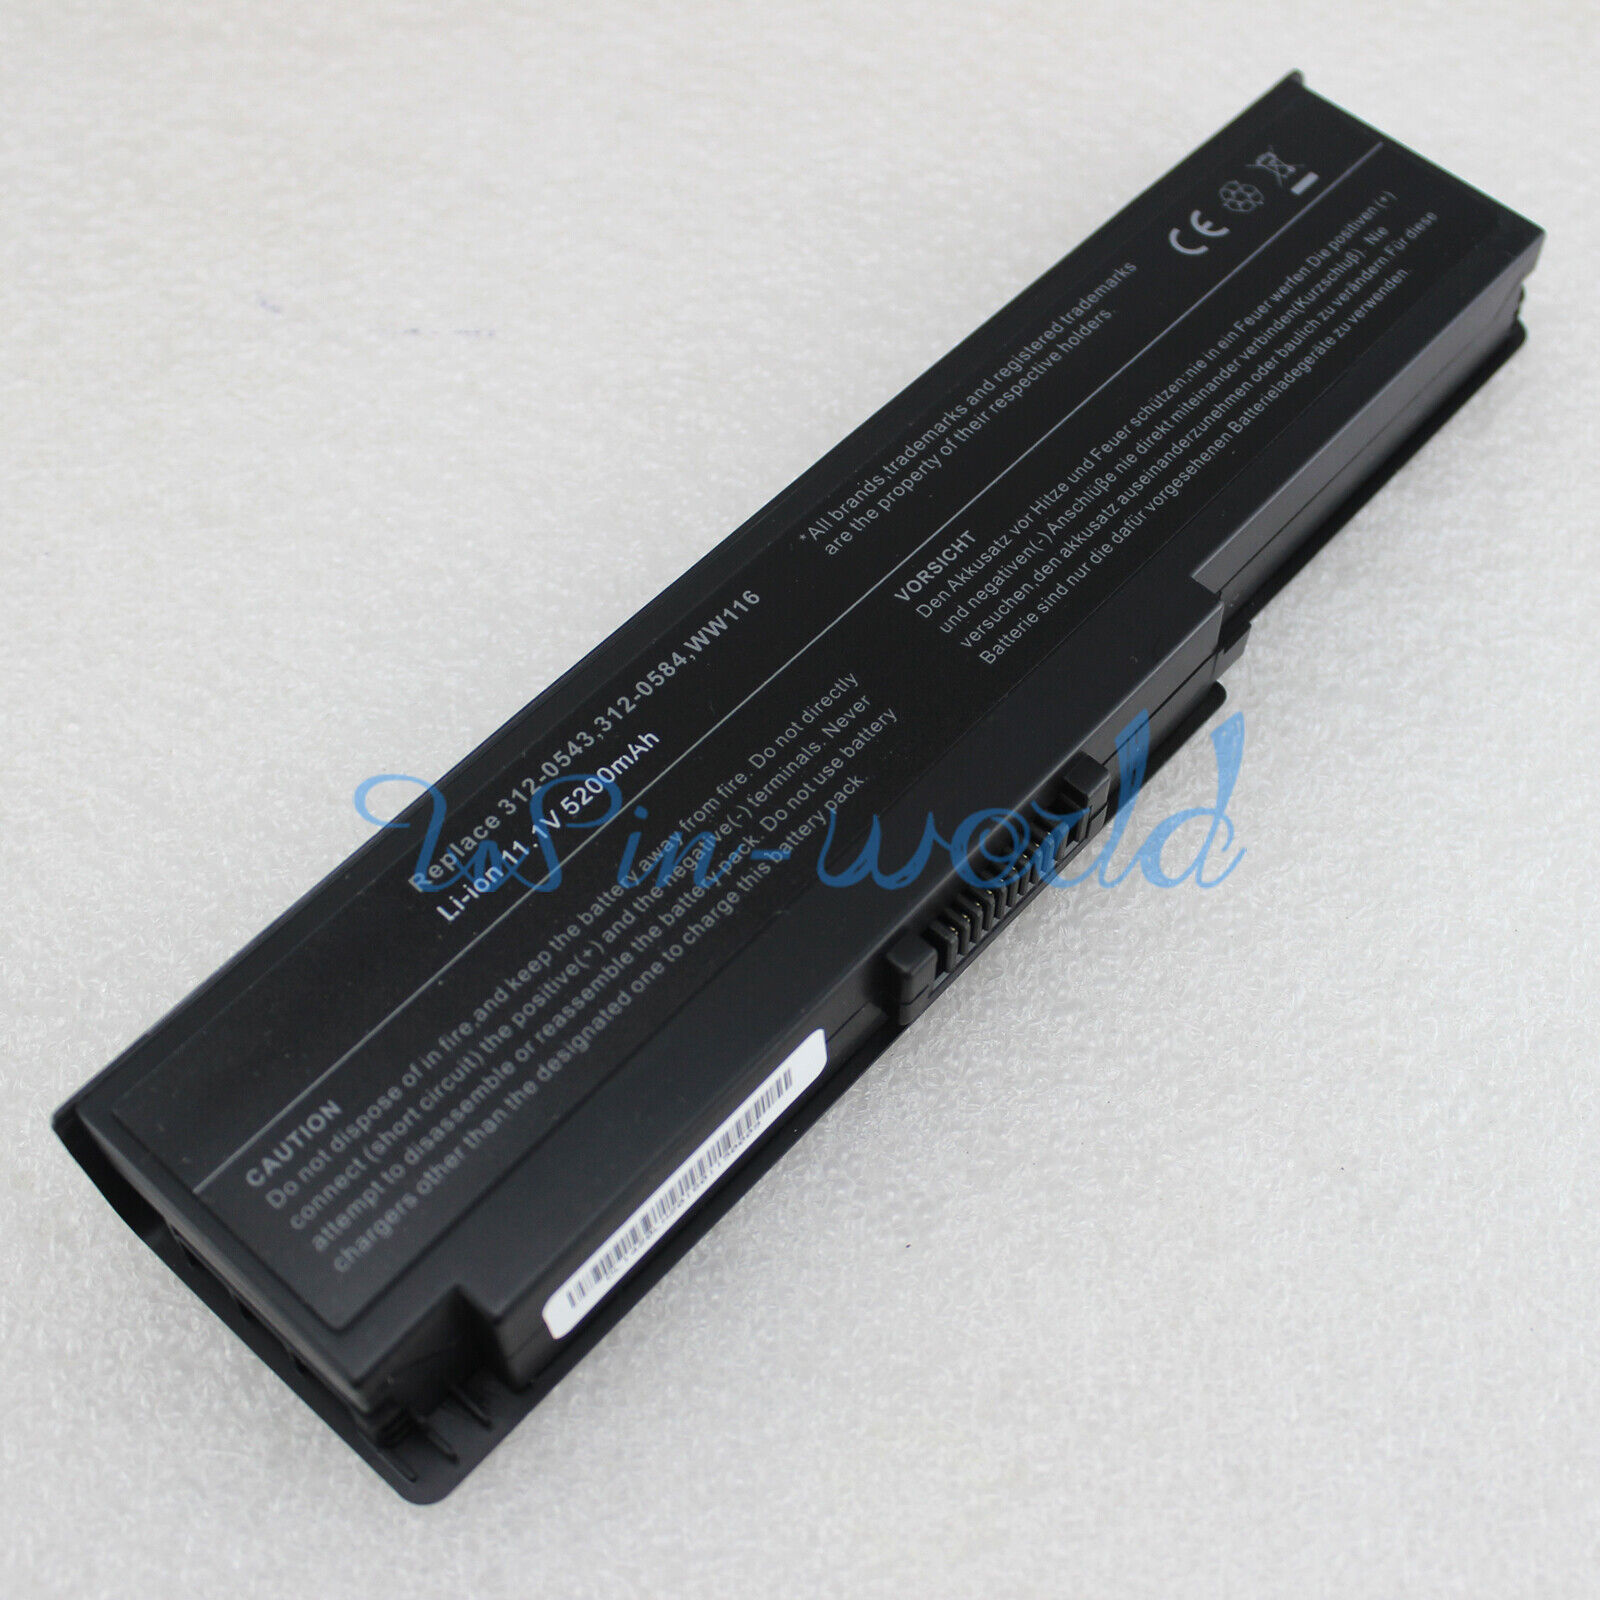 Battery for Dell Inspiron 1420 V1400 Vostro 1400 312-0543 312-0584 FT080 WW116